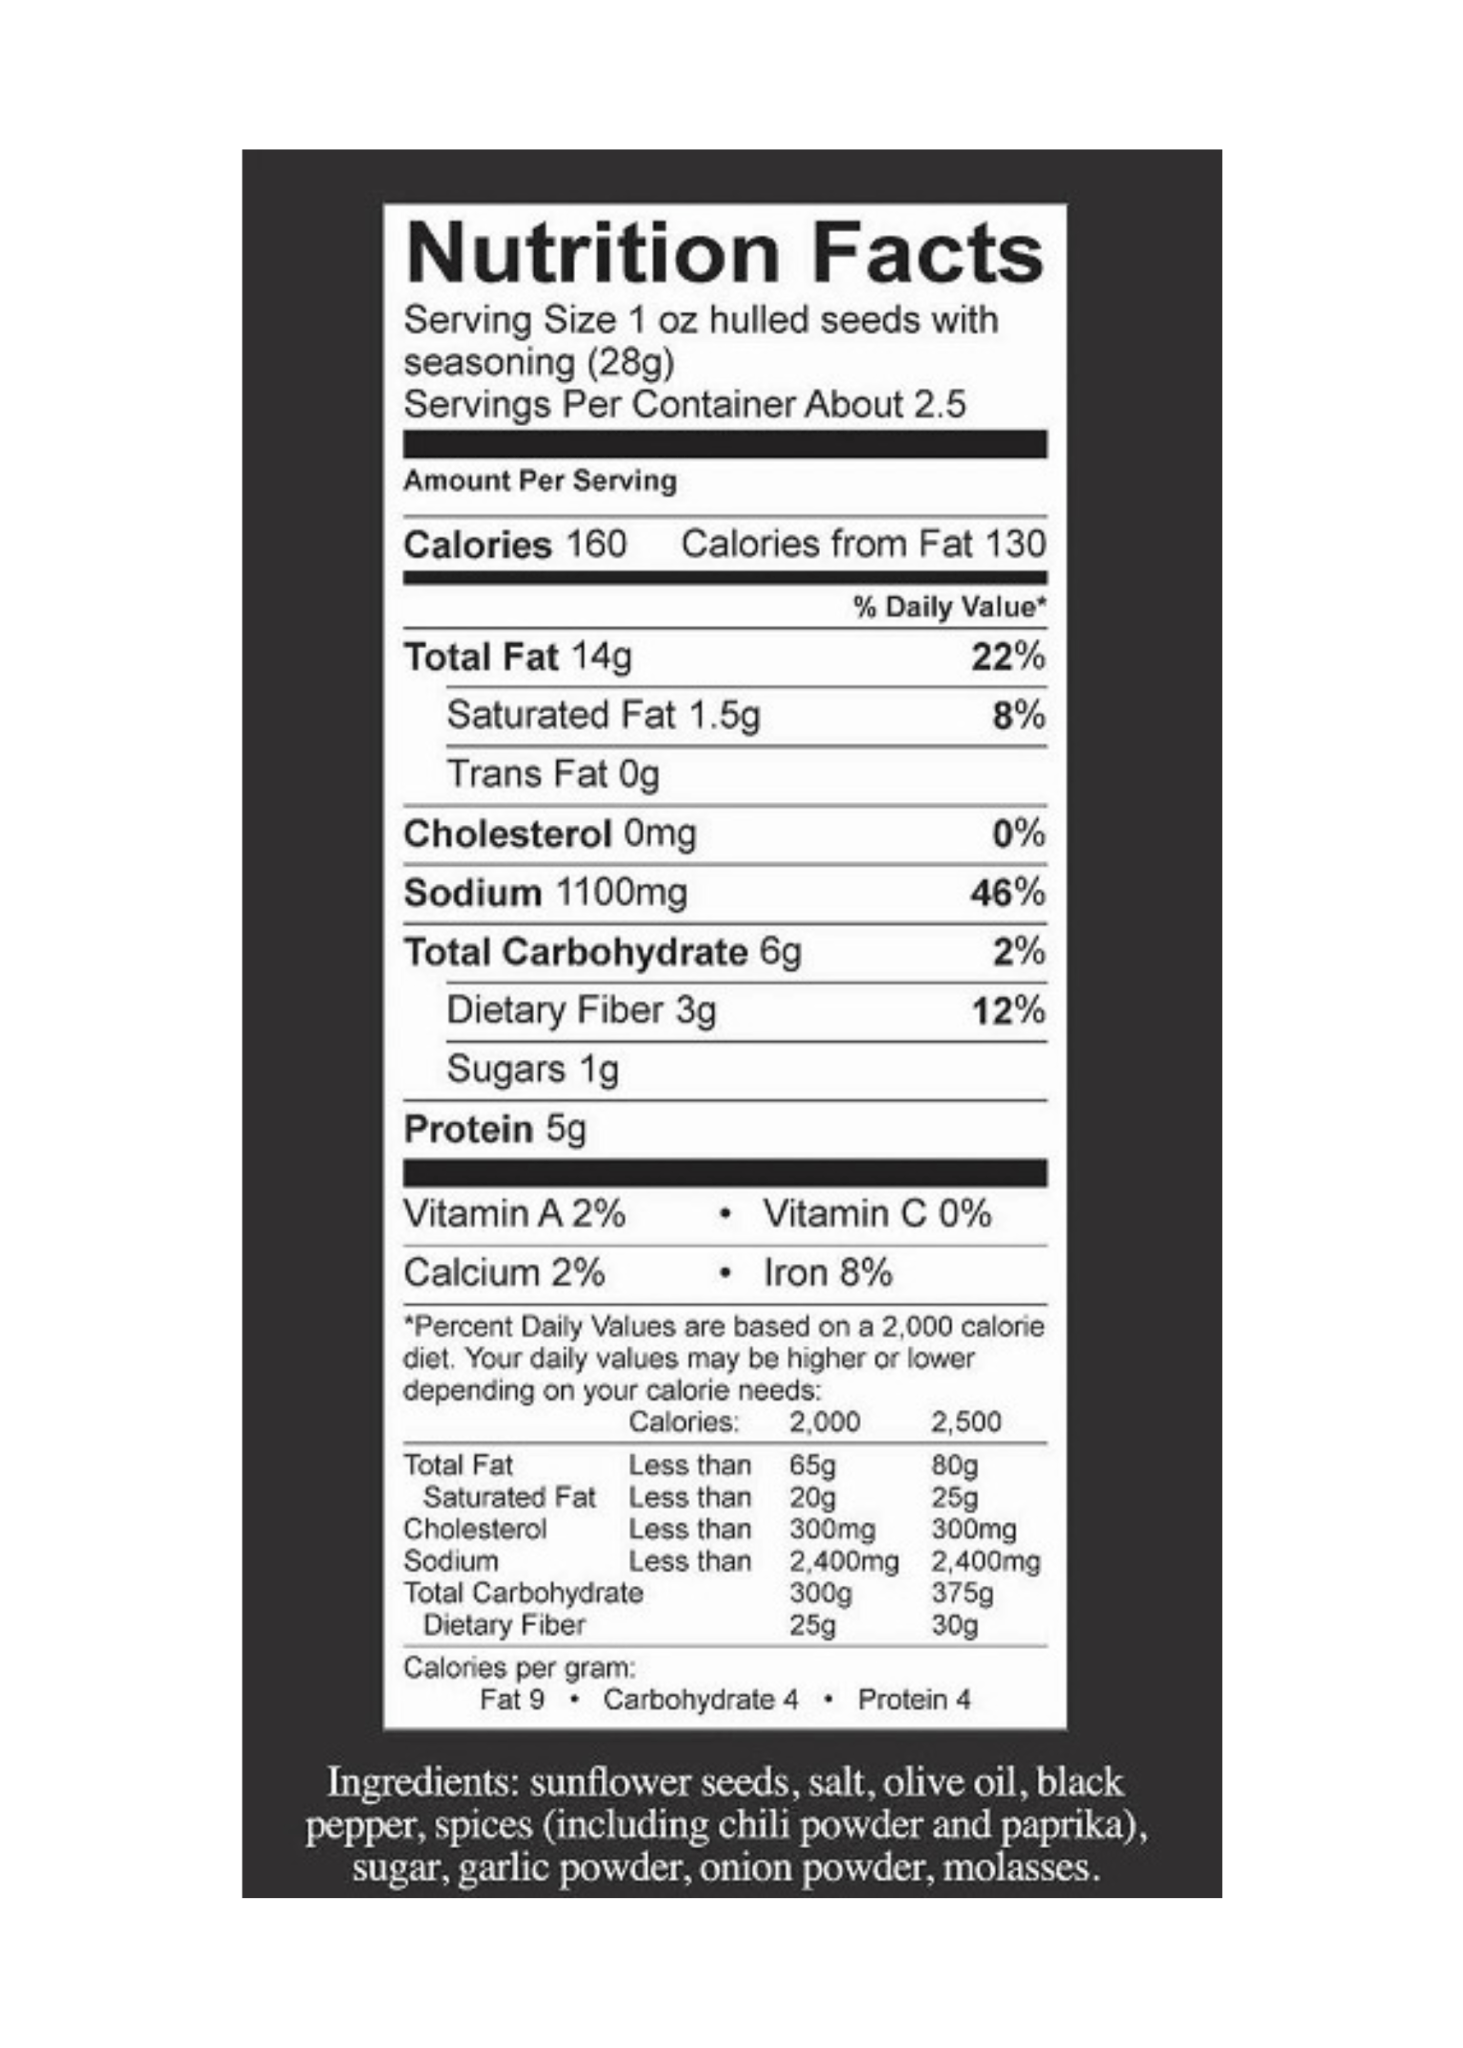 Inhale BBQ Black Pepper Sunflower Seeds Nutrition Facts